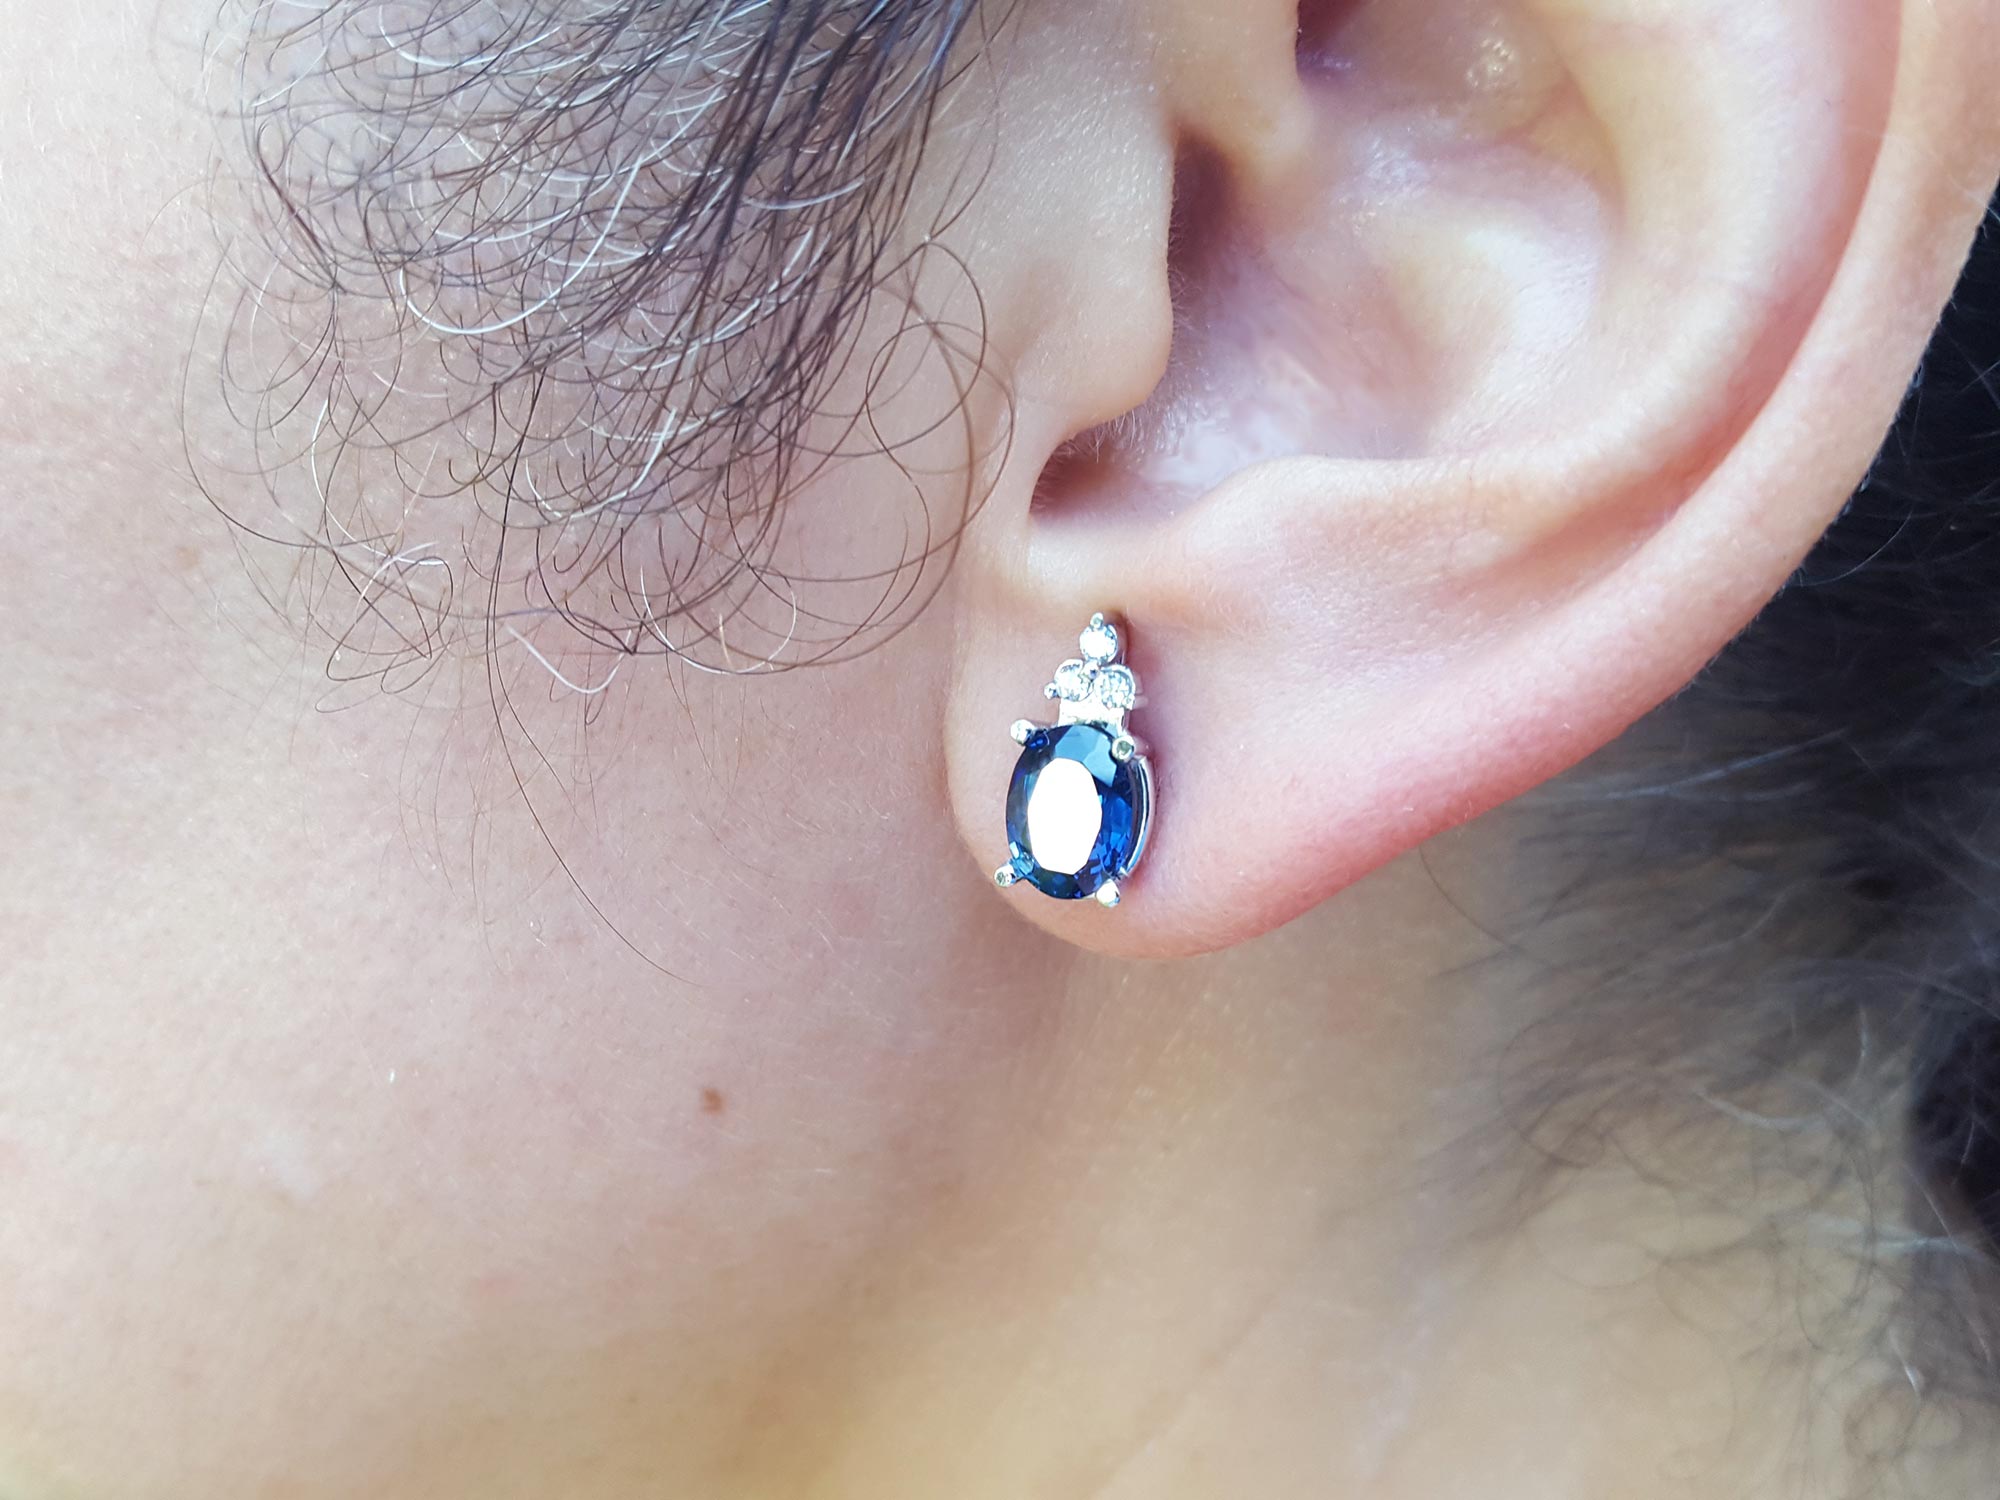 Sapphire and diamond earrings